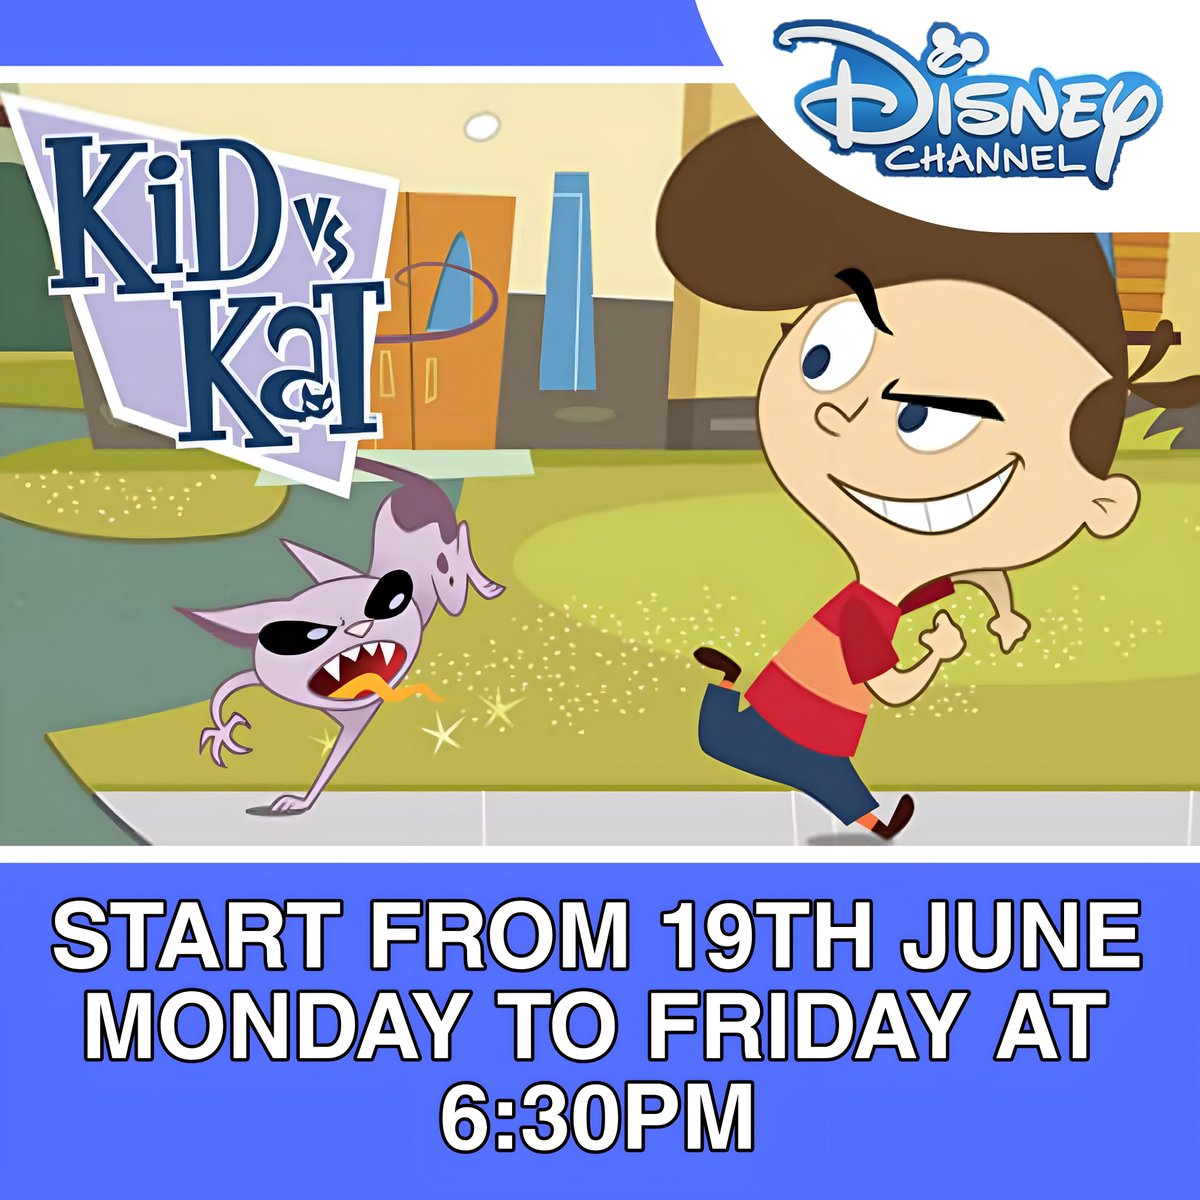 Kid vs Kat New Show Start From 19th June Monday To Friday at 6:30pm on Disney India
#animation 
#miraculous #miraculousindia #marvelhq #marvel_hq #hungama #hungamatv #disney #disneyindia #superhungama #disneychannel #netflix #netflixindia